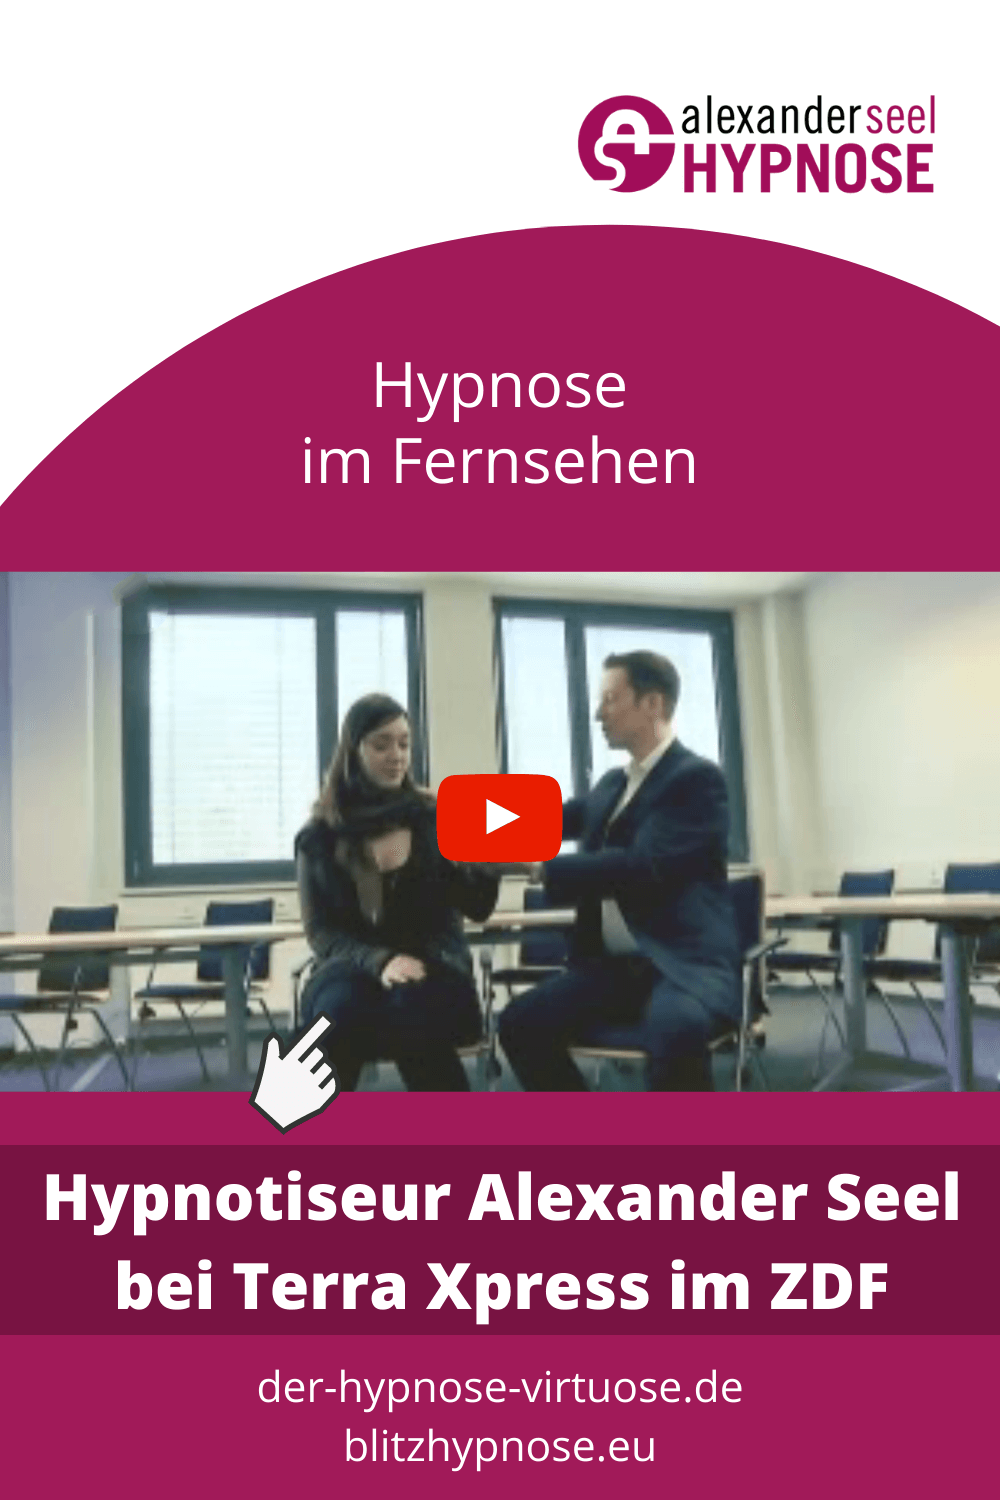 Hypnotiseur Alexander Seel Blitzhypnose im Fernsehen bei Terra Xpress ZDF - Pinterest Pin